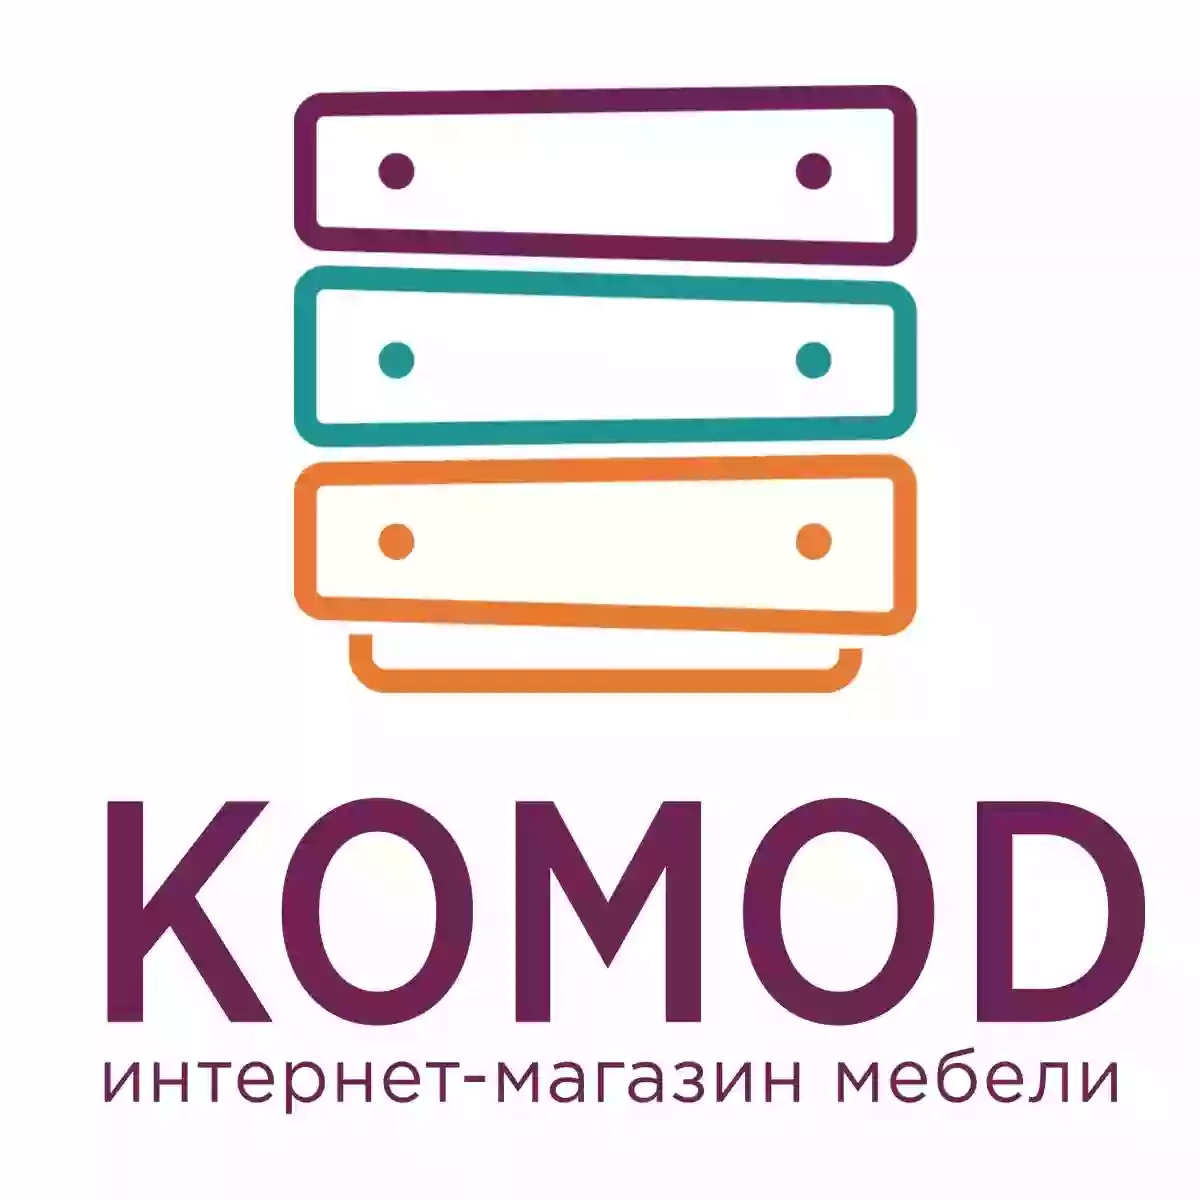 КОМОД bc - интернет-магазин мебели